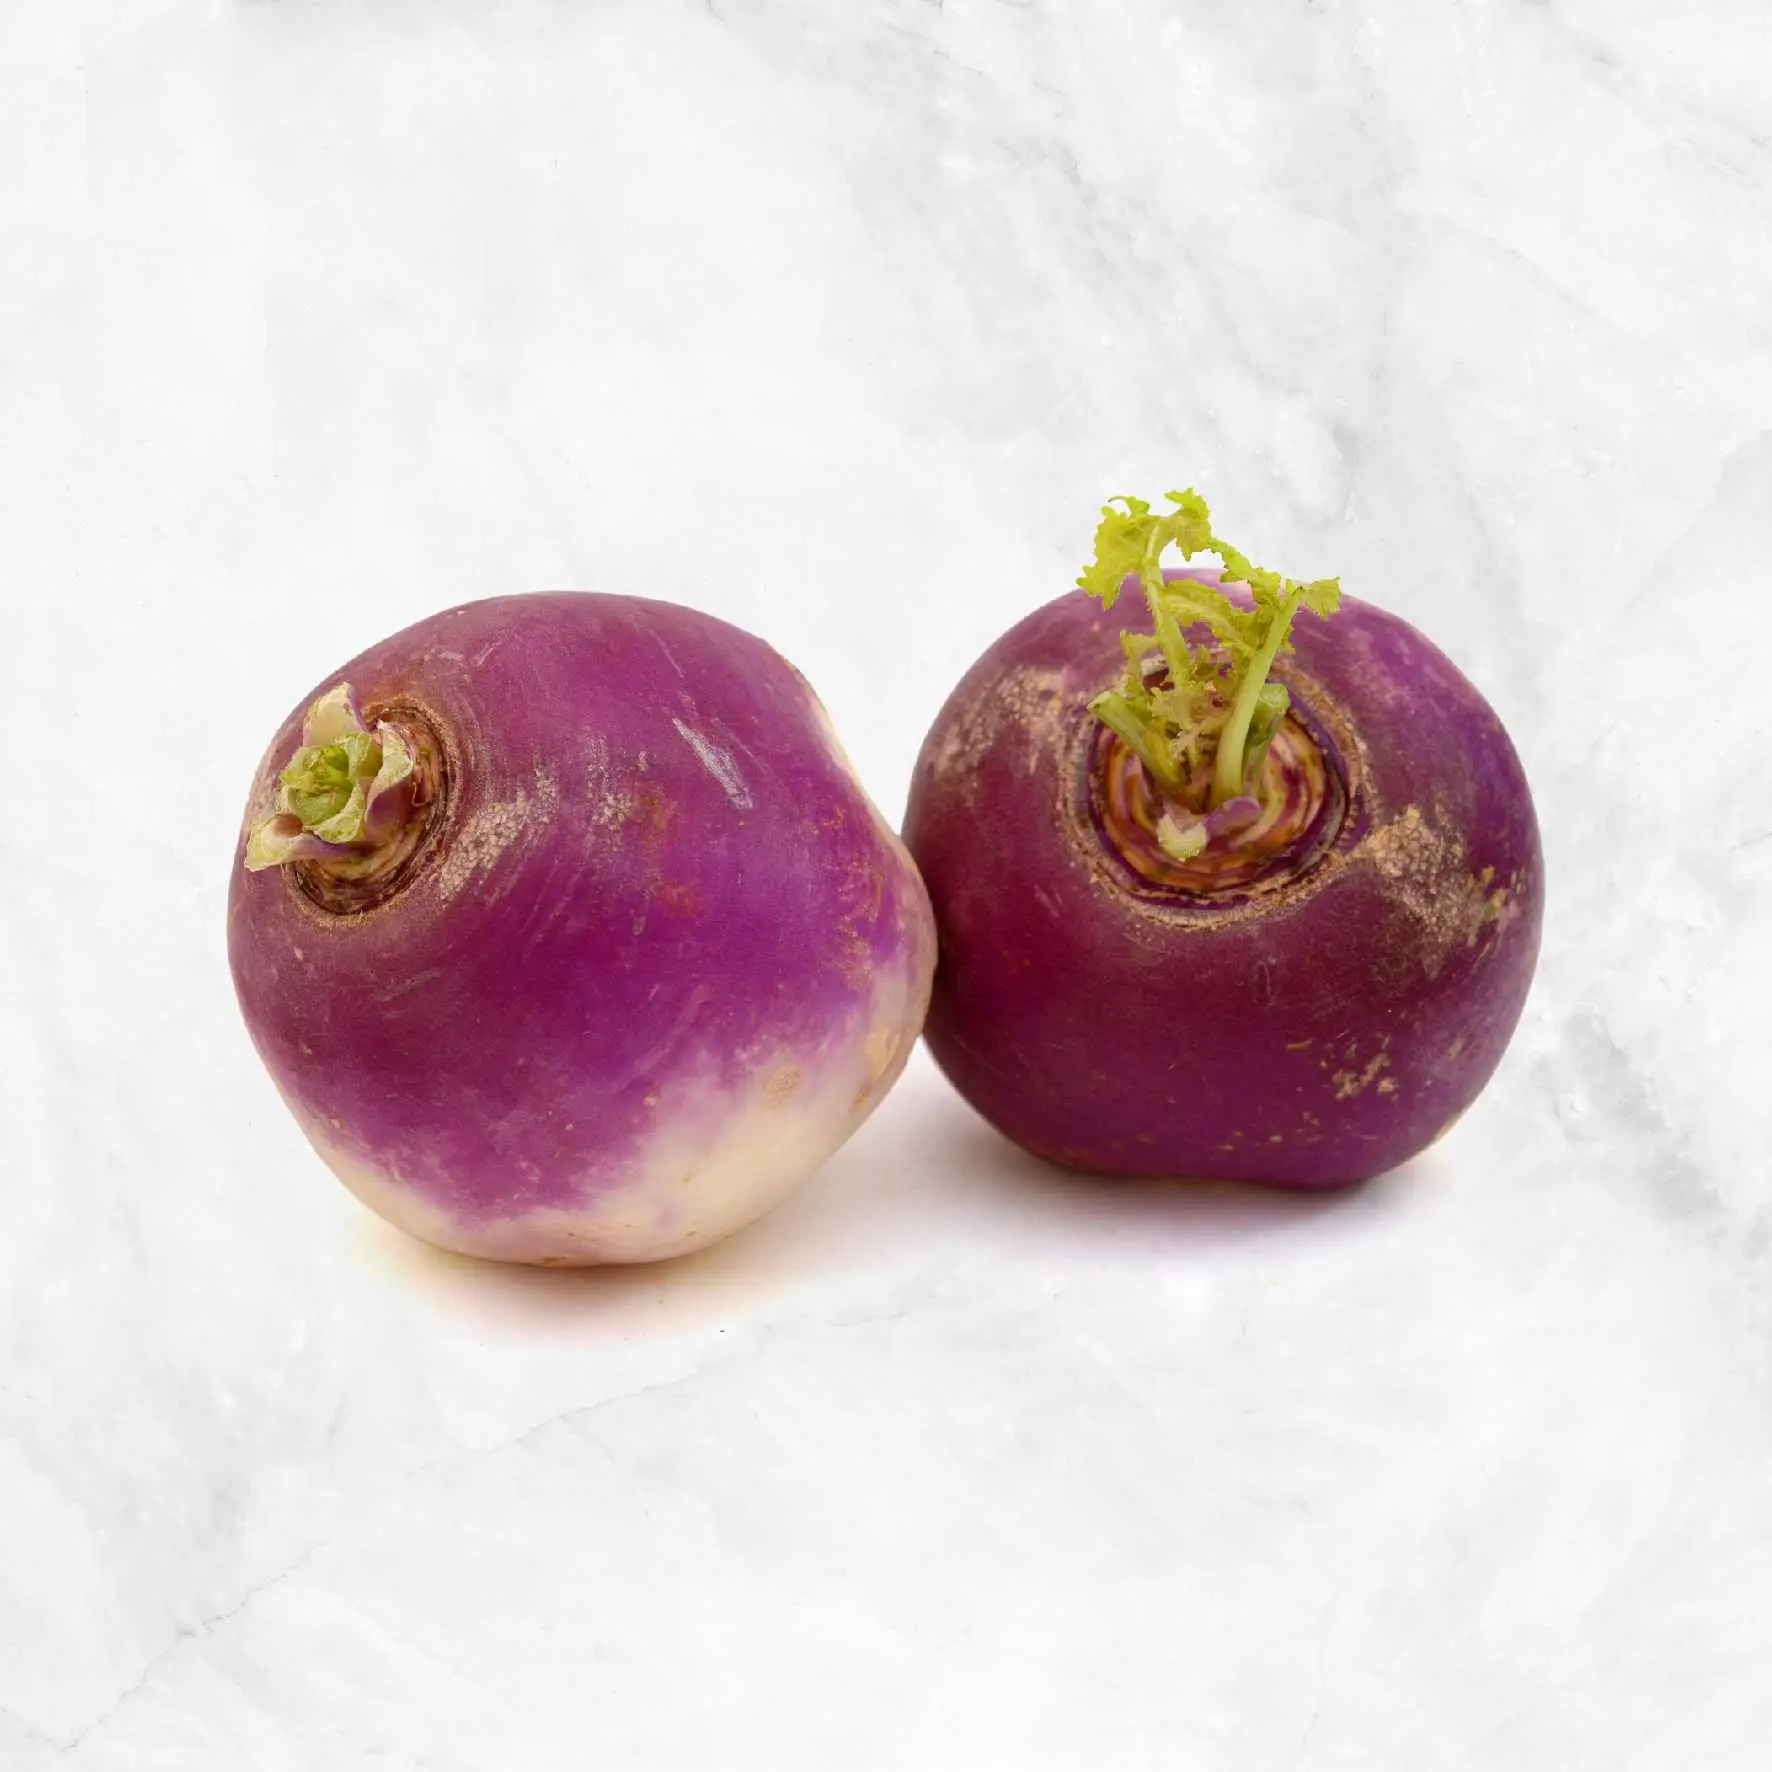 Organic Purple Top Turnips Delivery